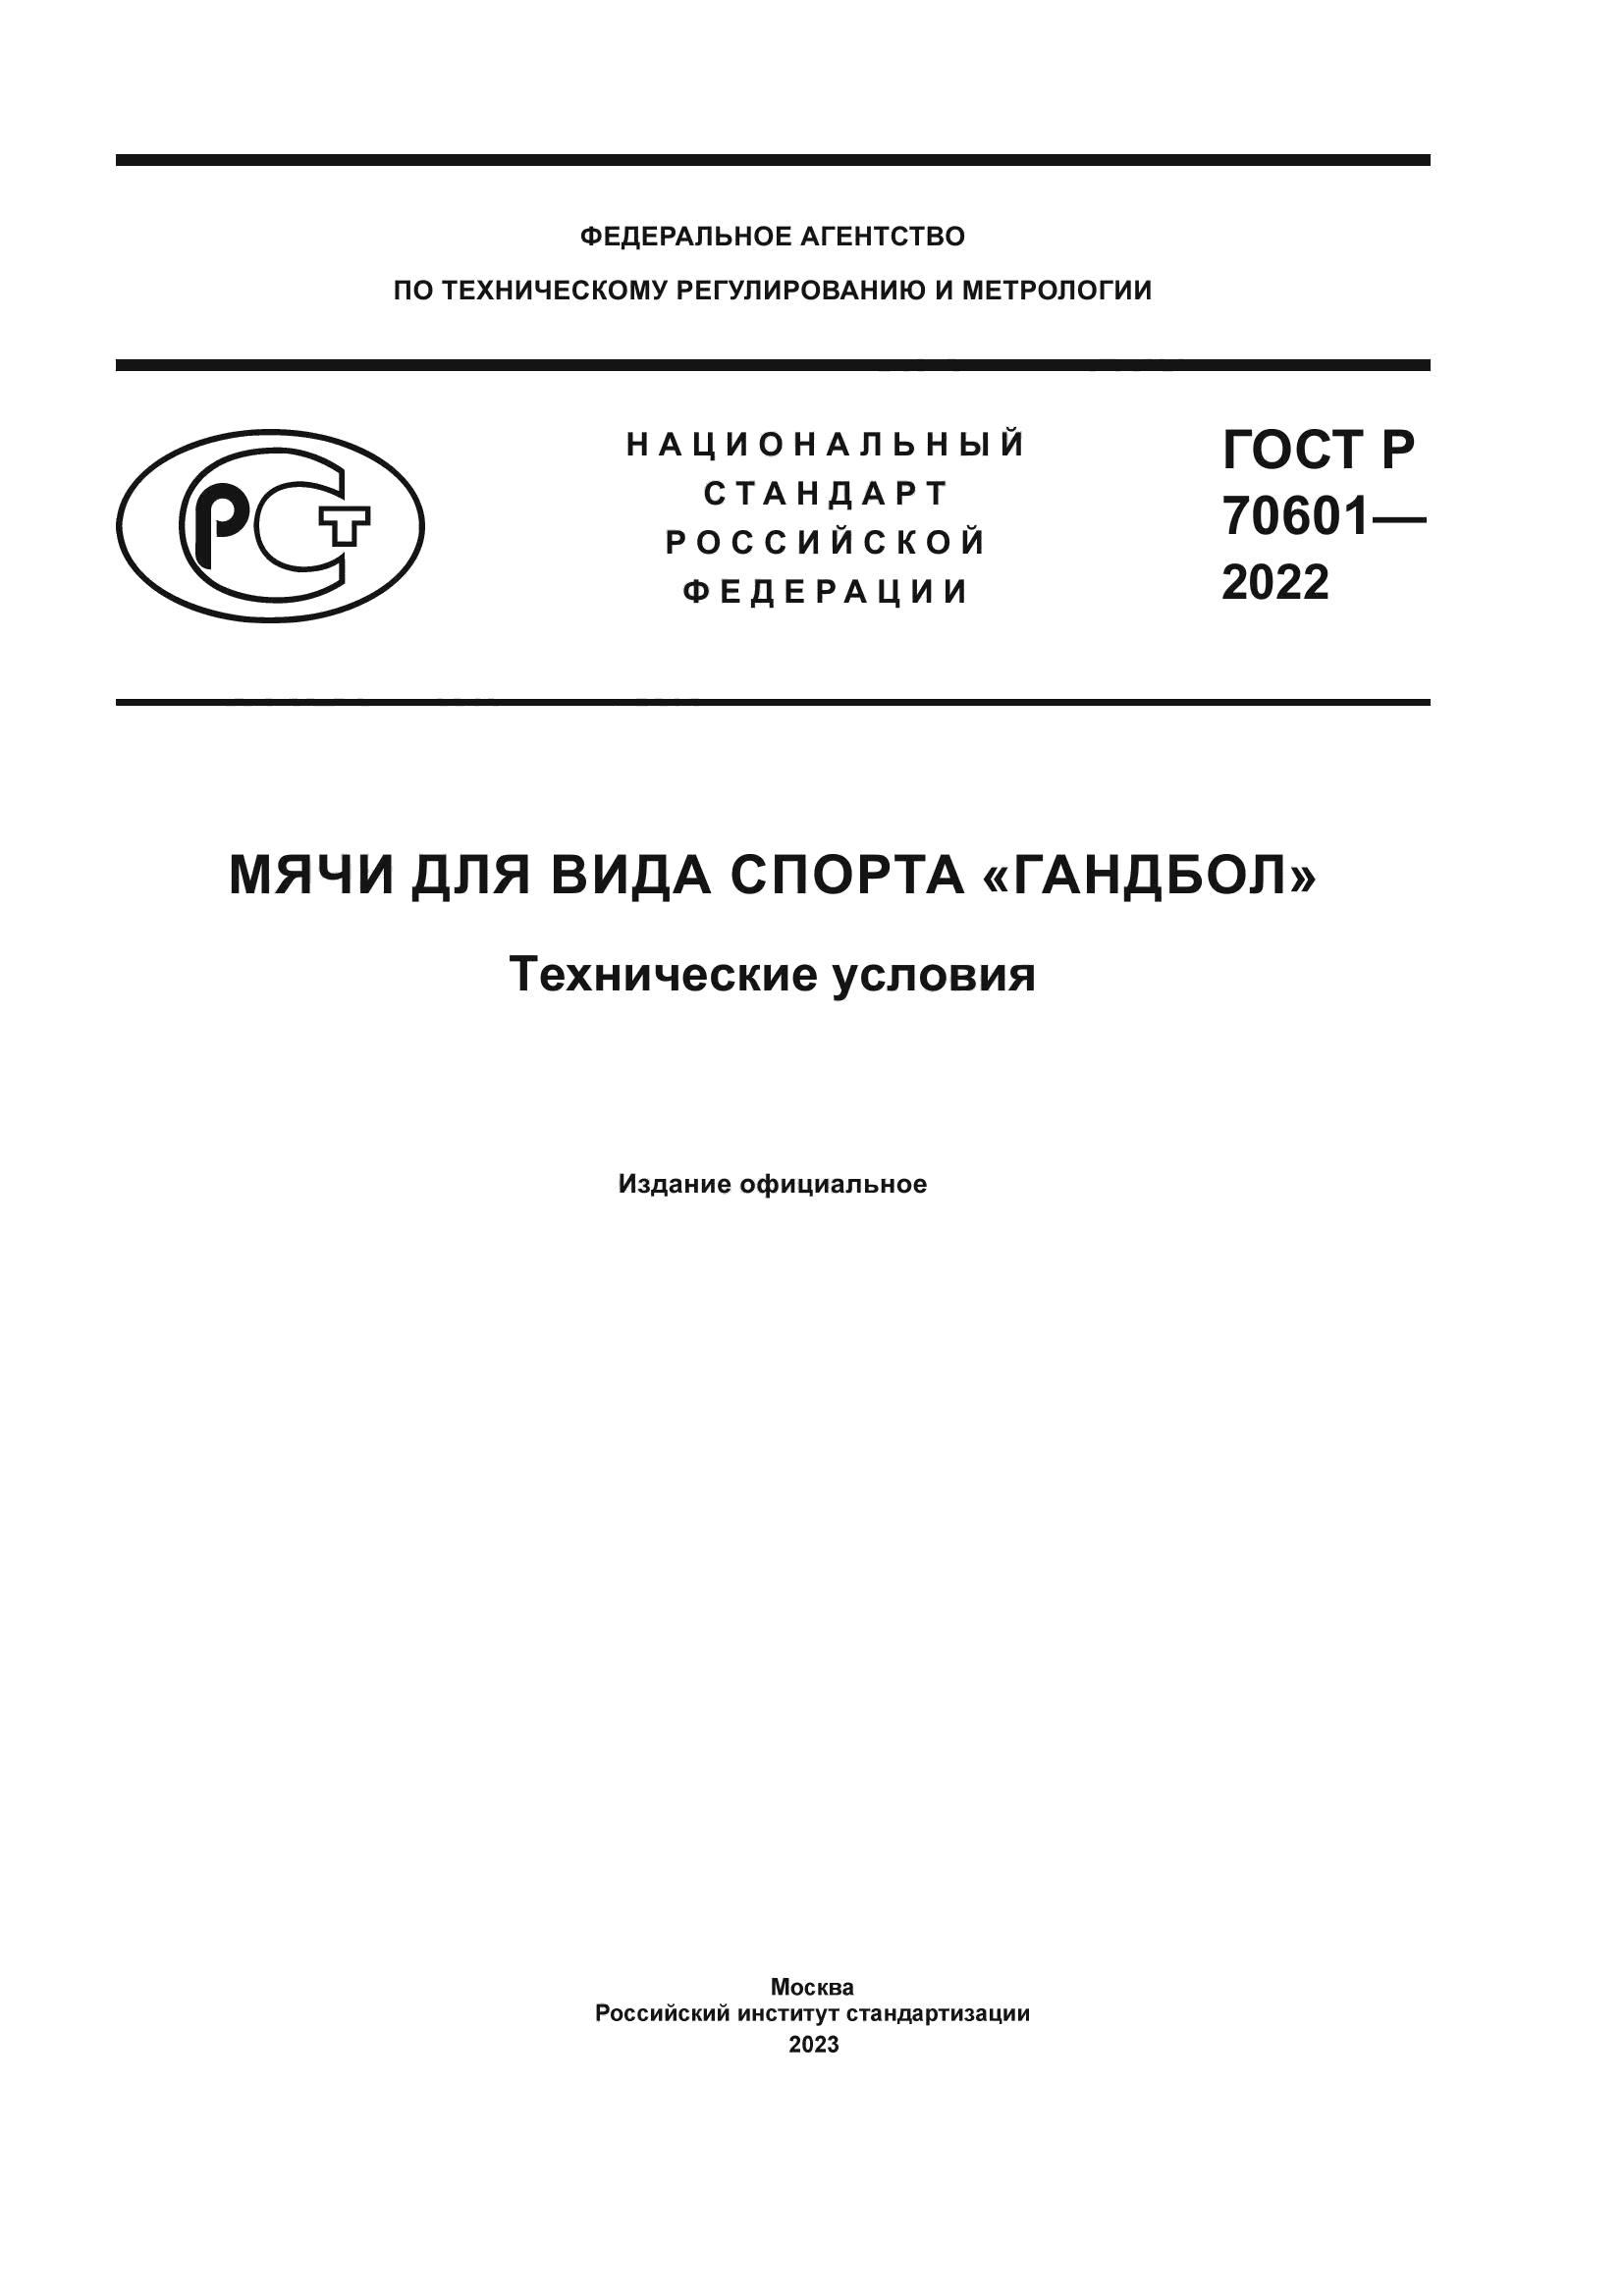 ГОСТ Р 70601-2022